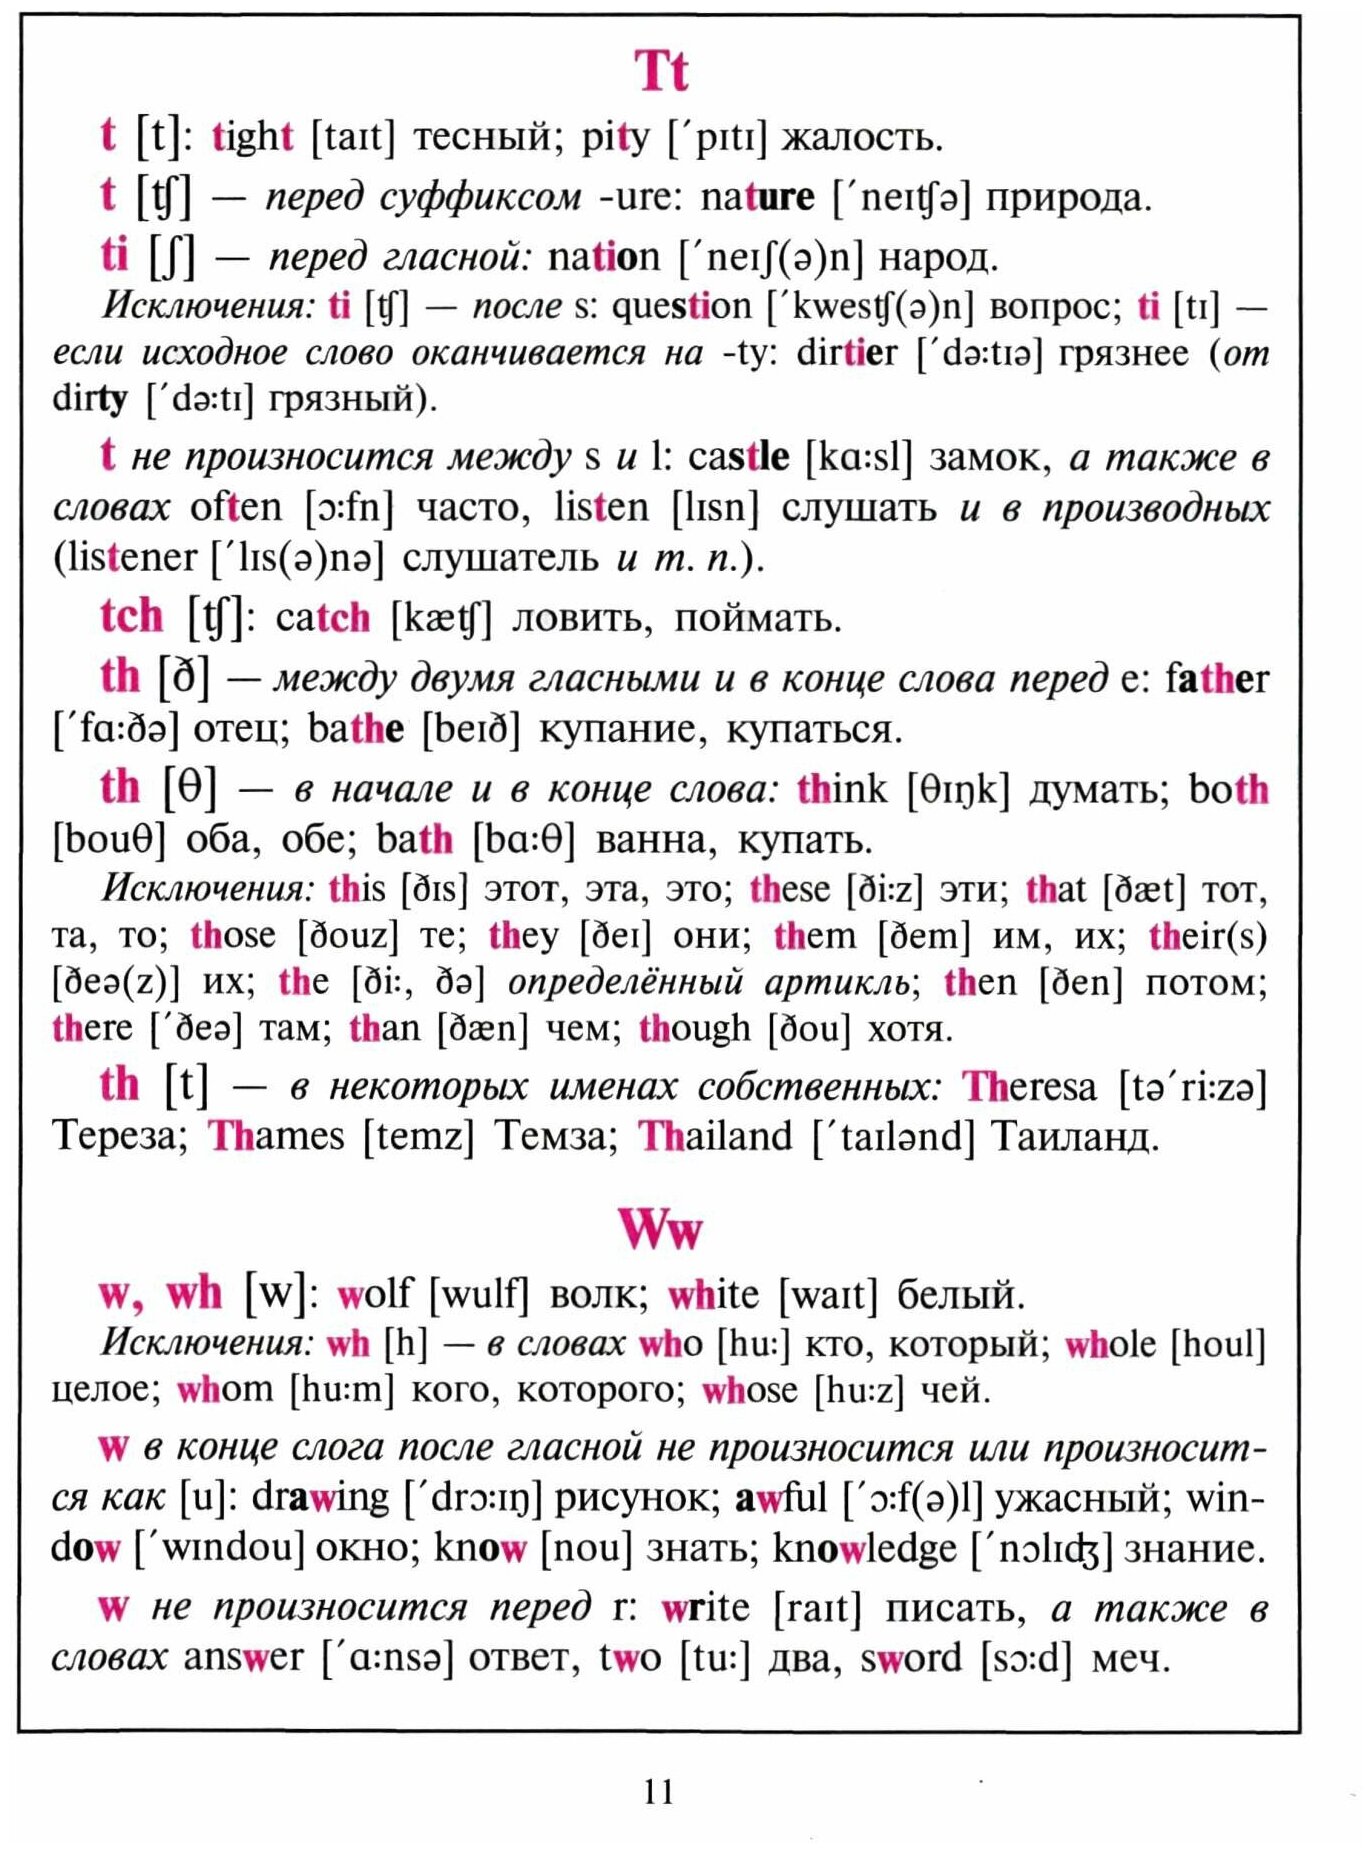 Английская грамматика в таблицах и схемах - фото №4